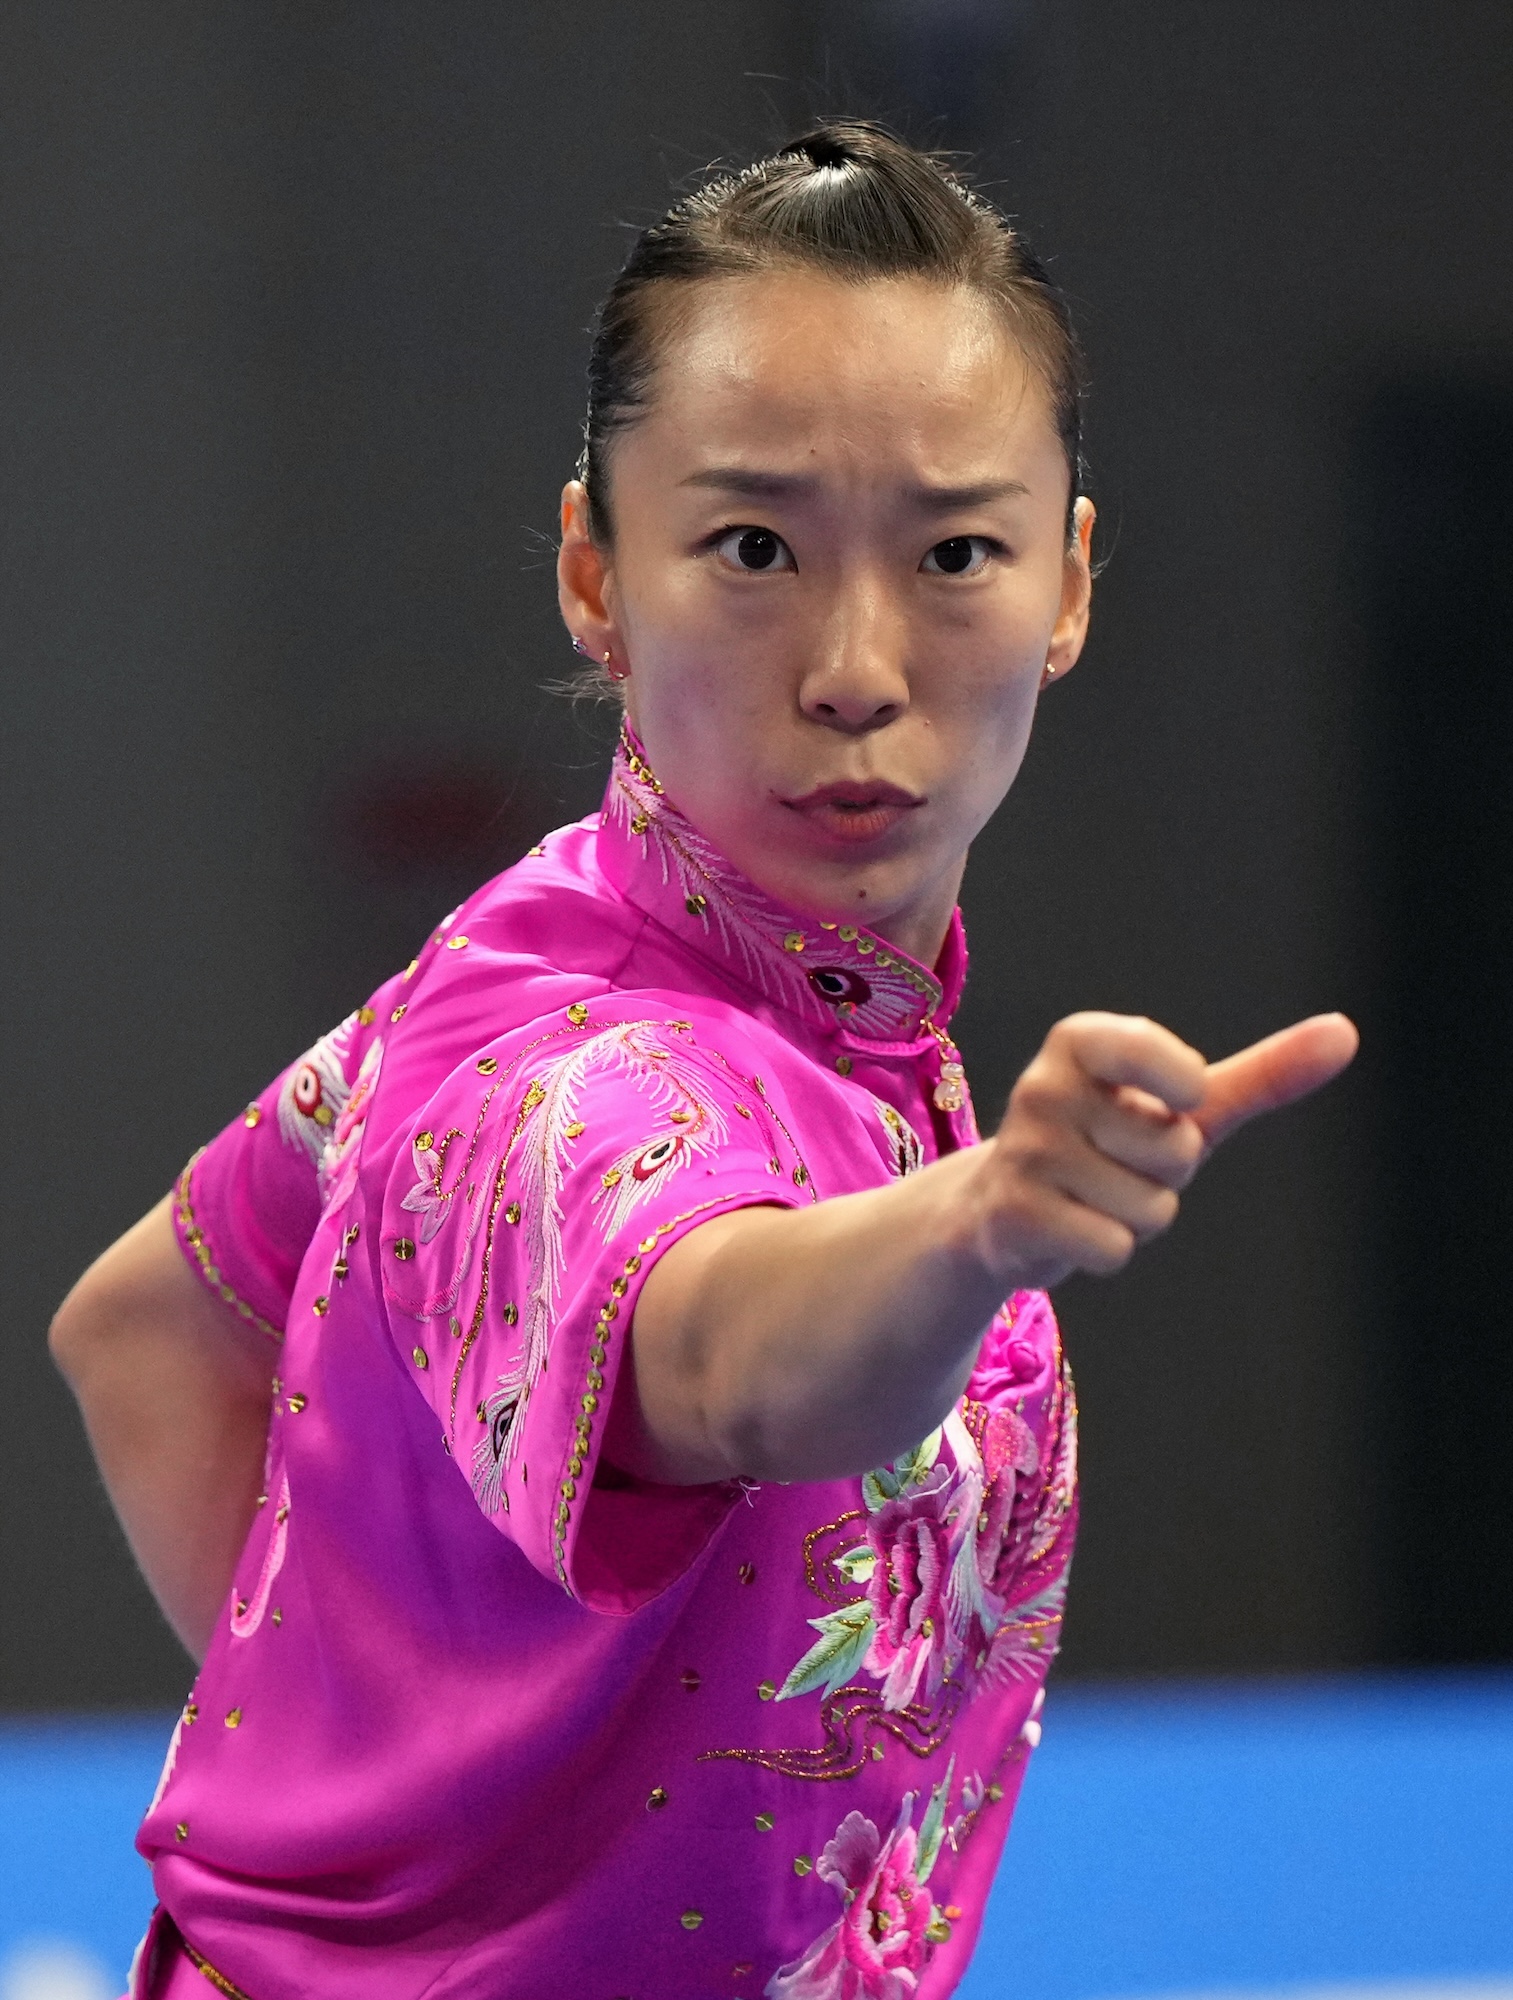 Li performing changquan at the 19th Asian Games in Hangzhou